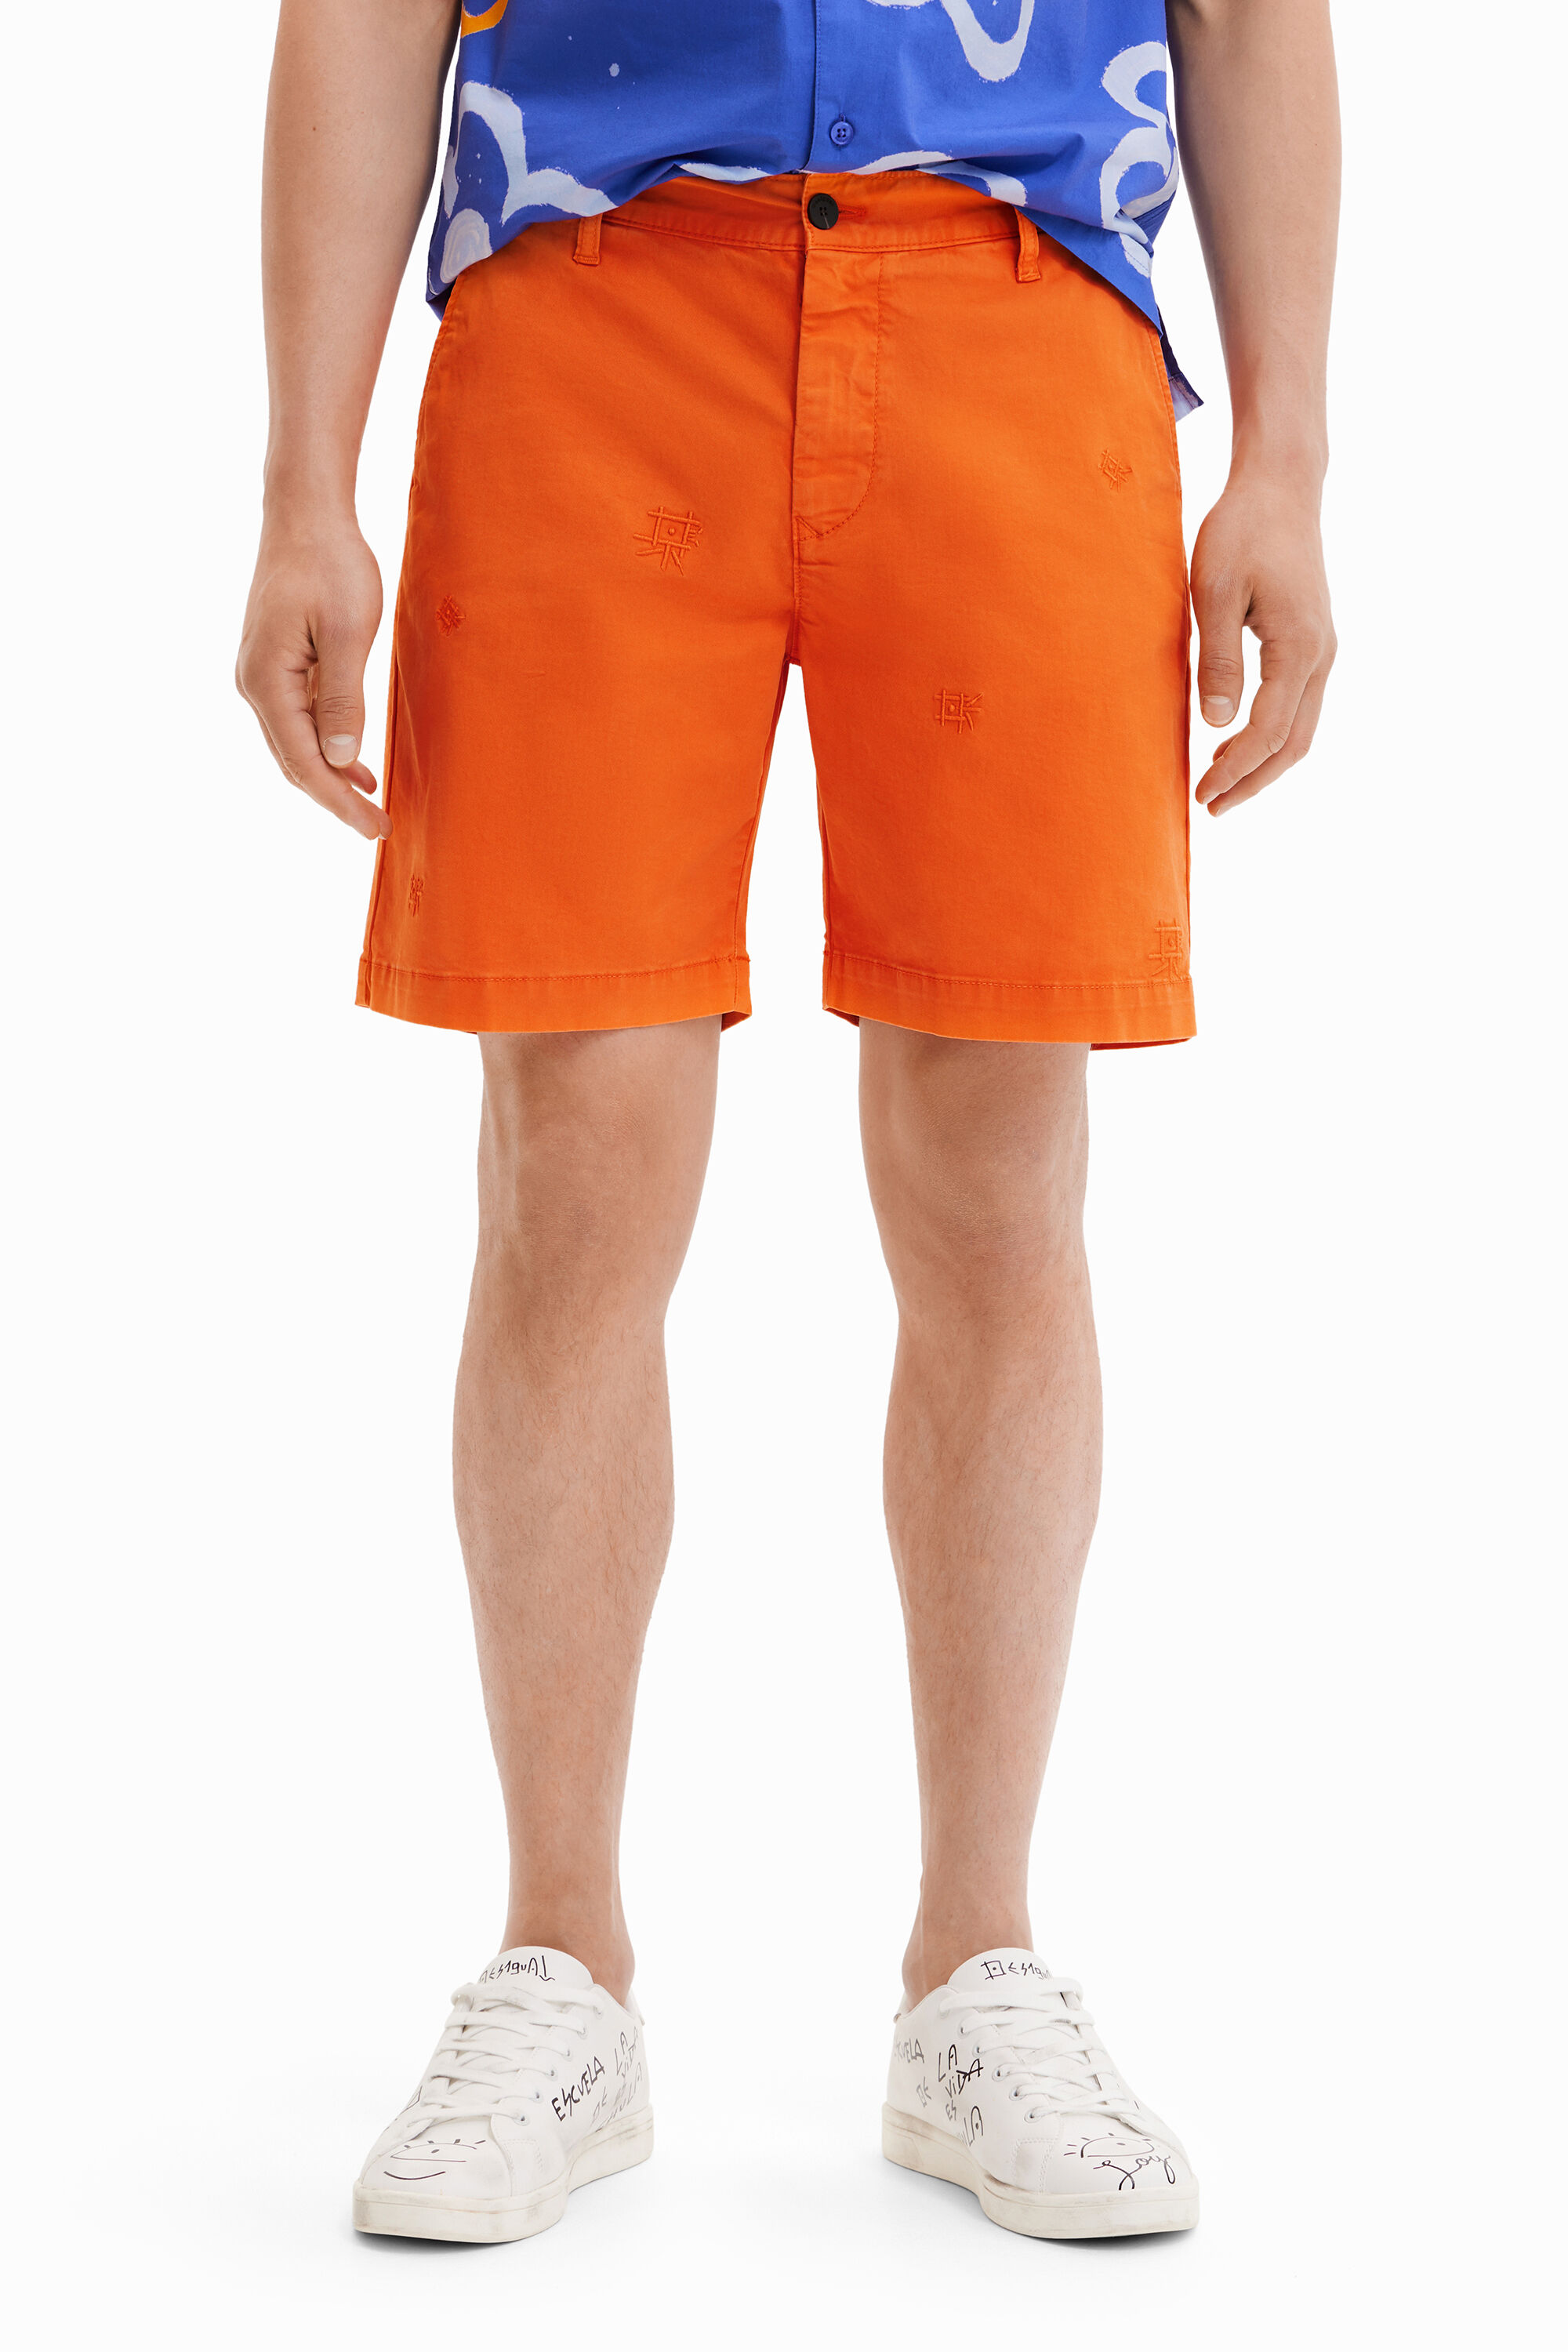 Embroidered Bermuda shorts - ORANGE - 28